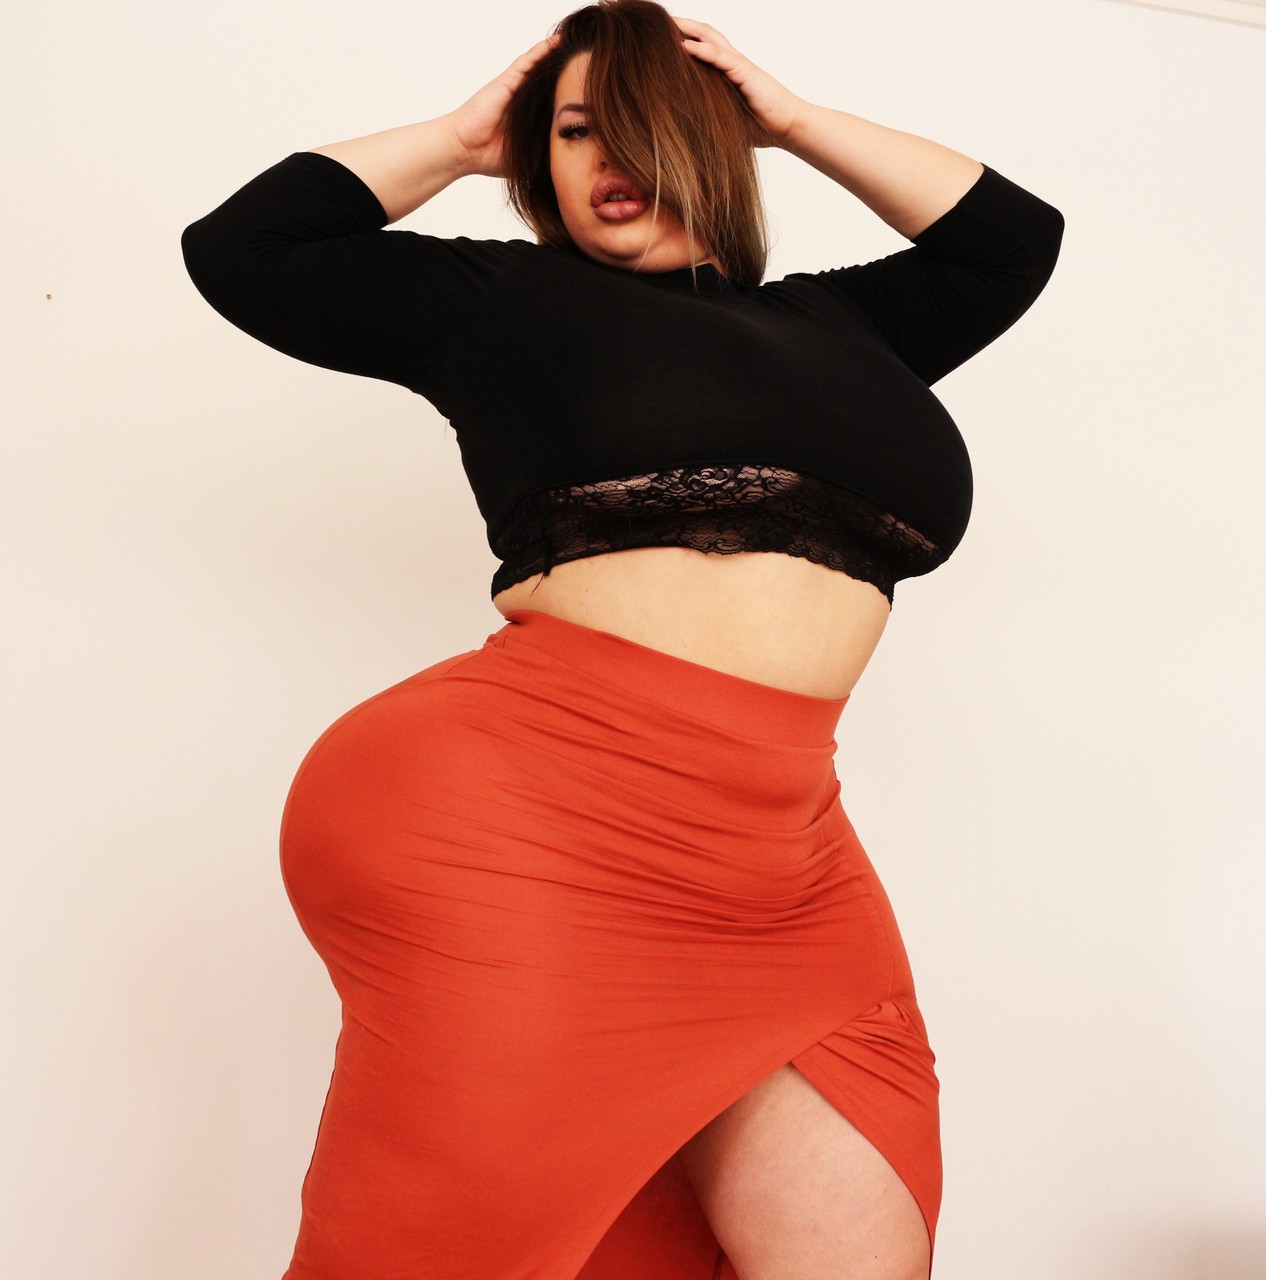 Stunning MILF fatty Natasha Crown flaunting her very big ass in a tight skirt foto porno #423816664